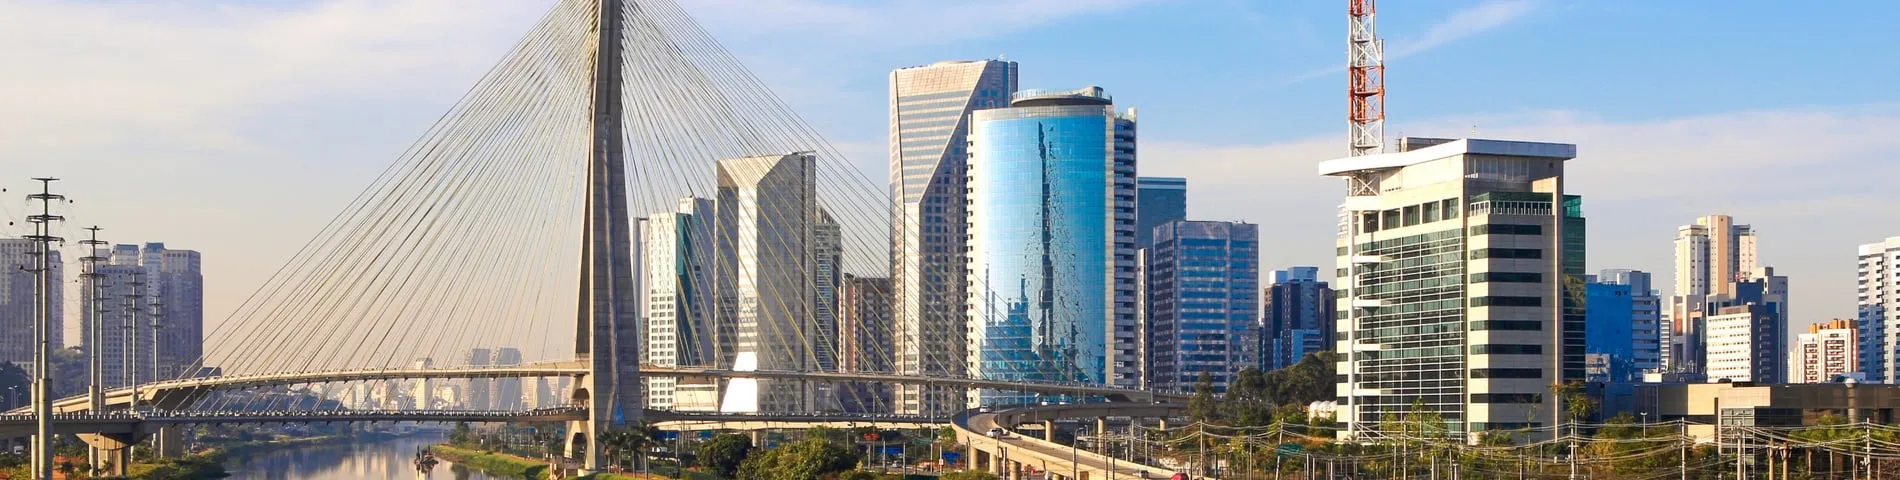 Sao Paulo - General